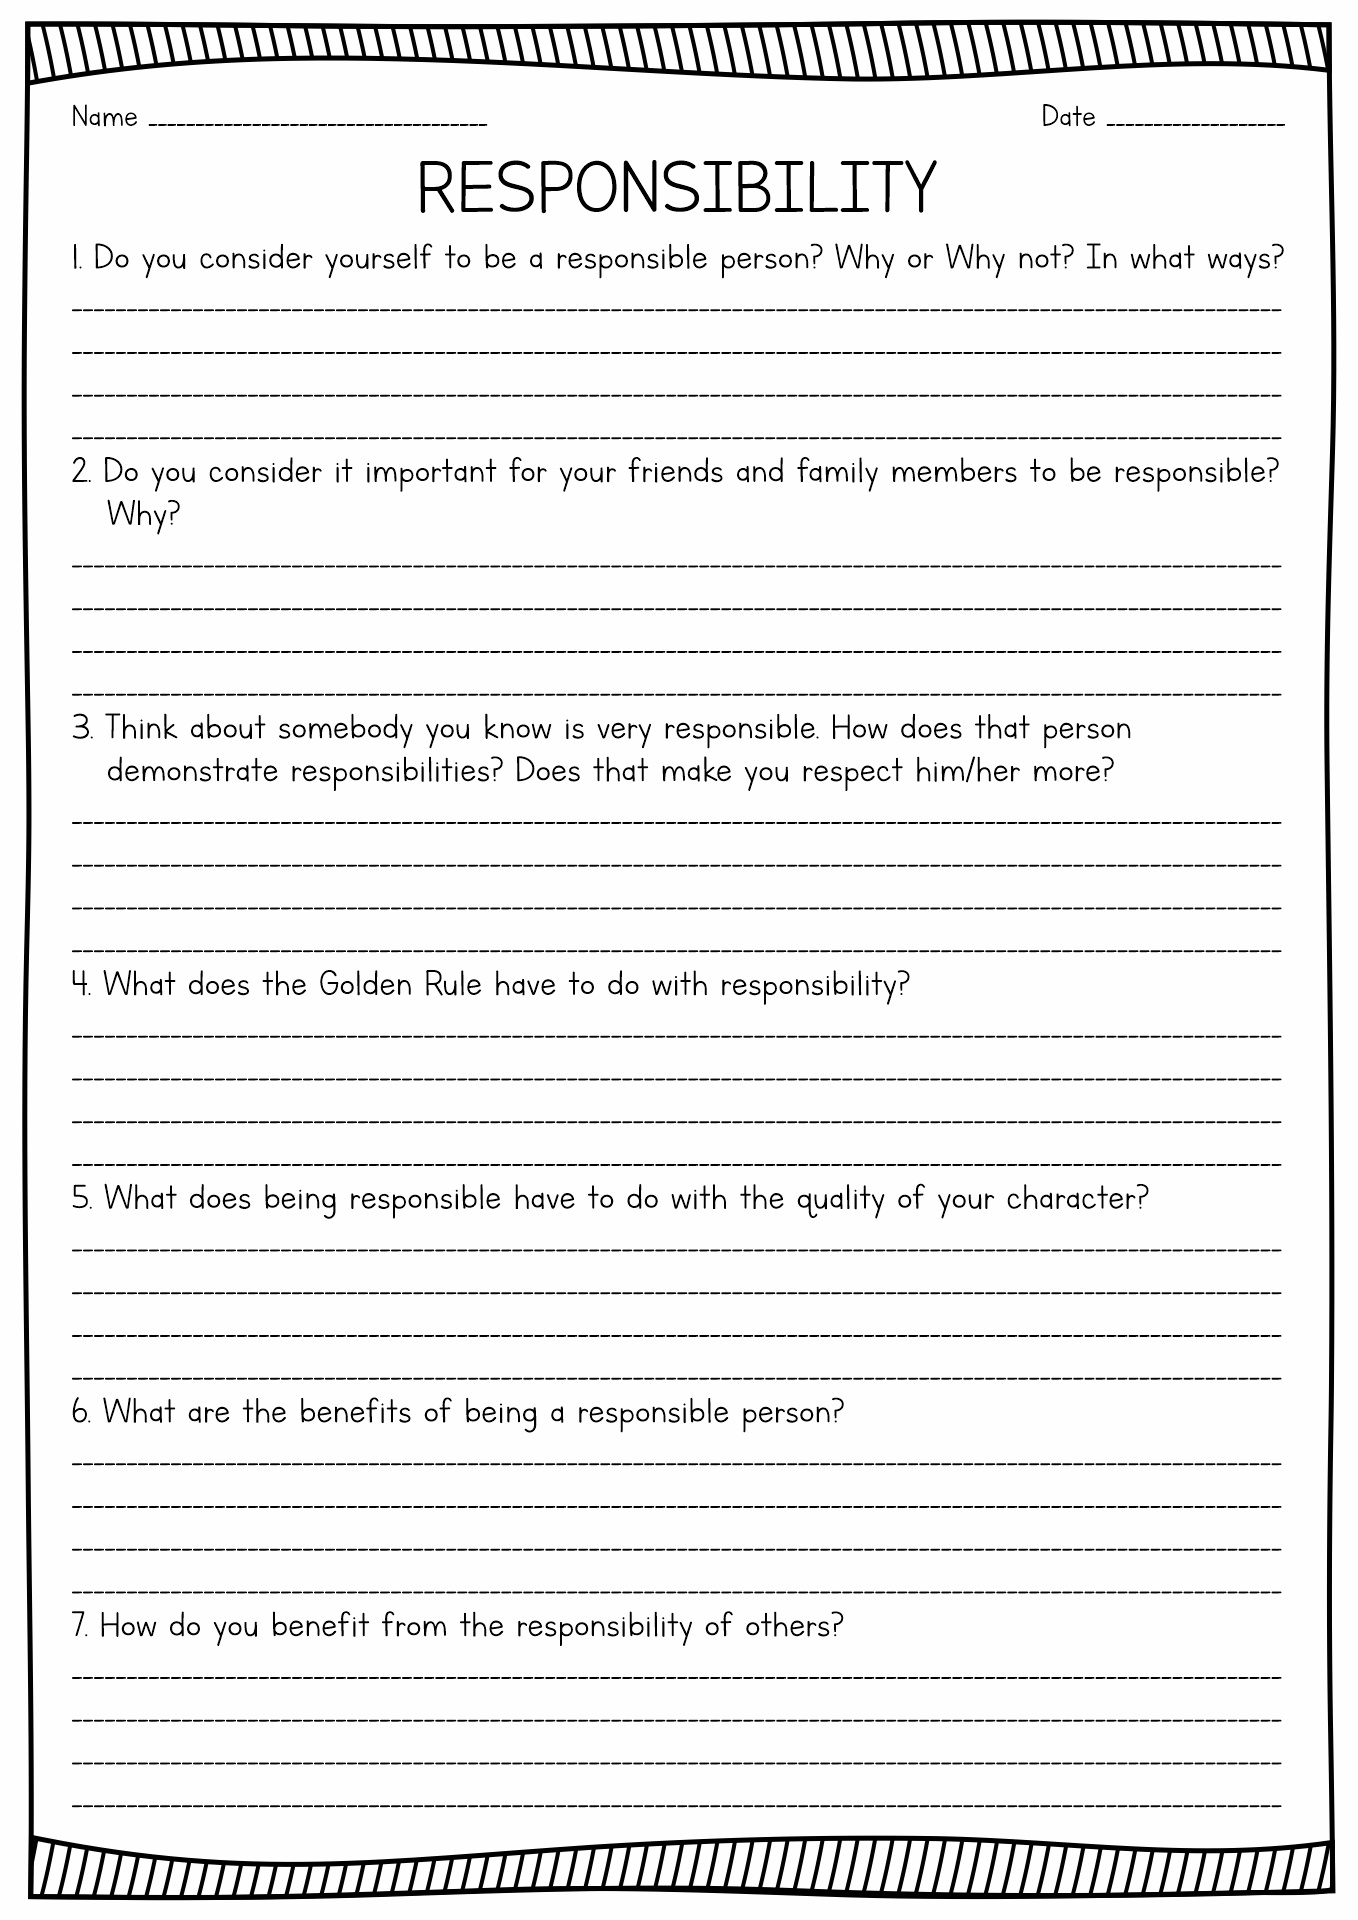 13-best-images-of-printable-worksheets-on-responsibility-kindergarten